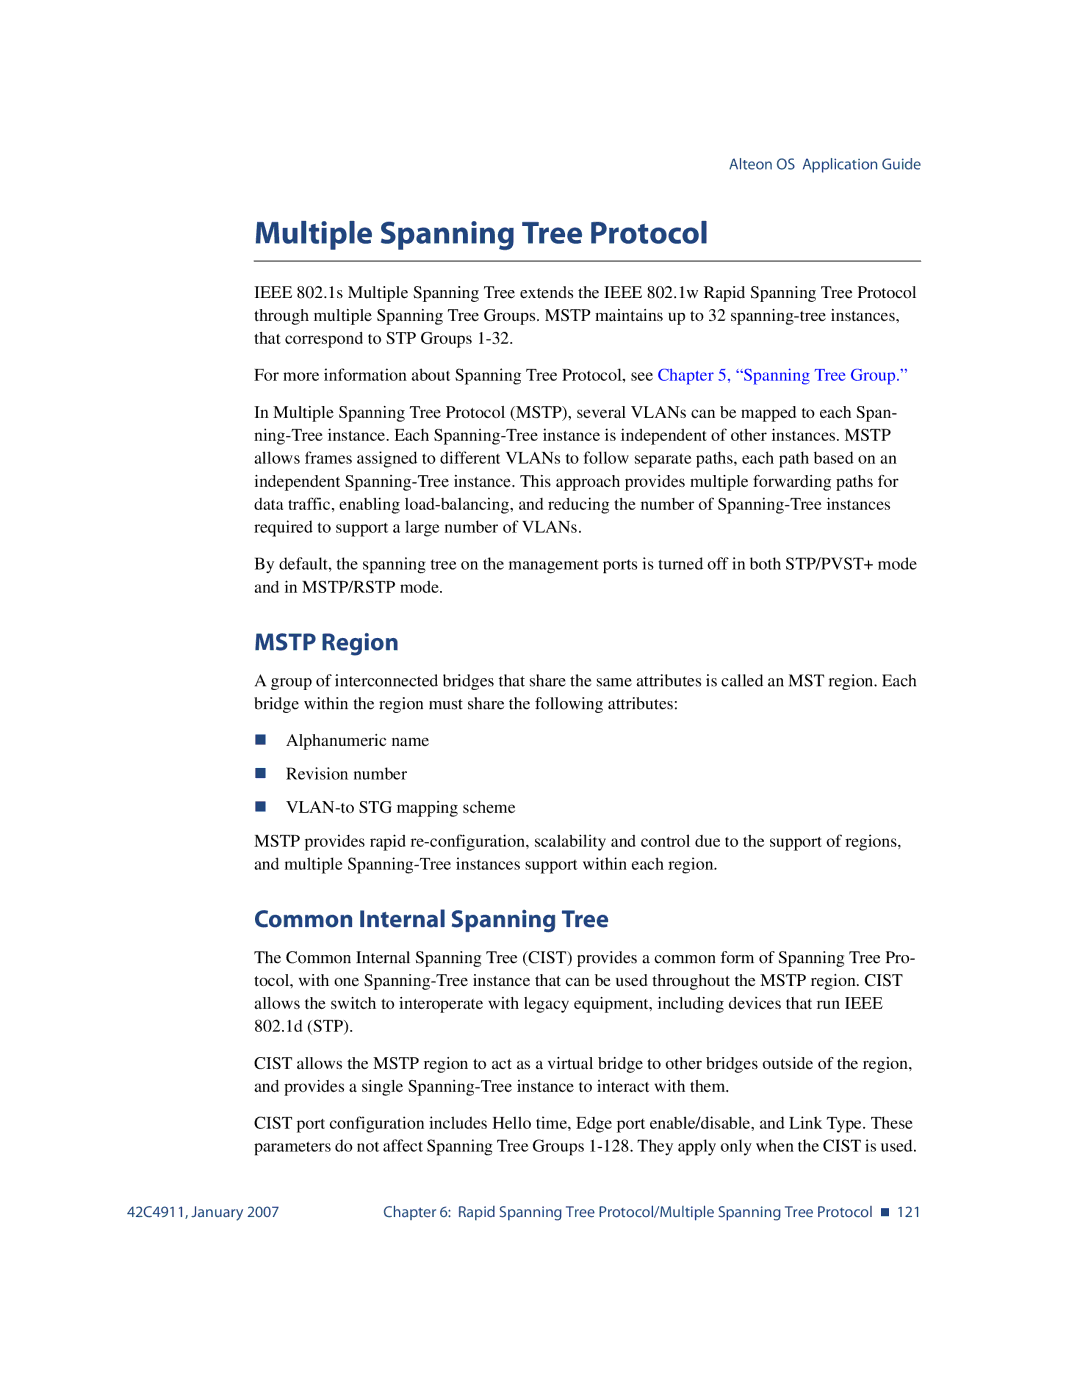 Nortel Networks 42C4911 manual Multiple Spanning Tree Protocol, Mstp Region, Common Internal Spanning Tree 